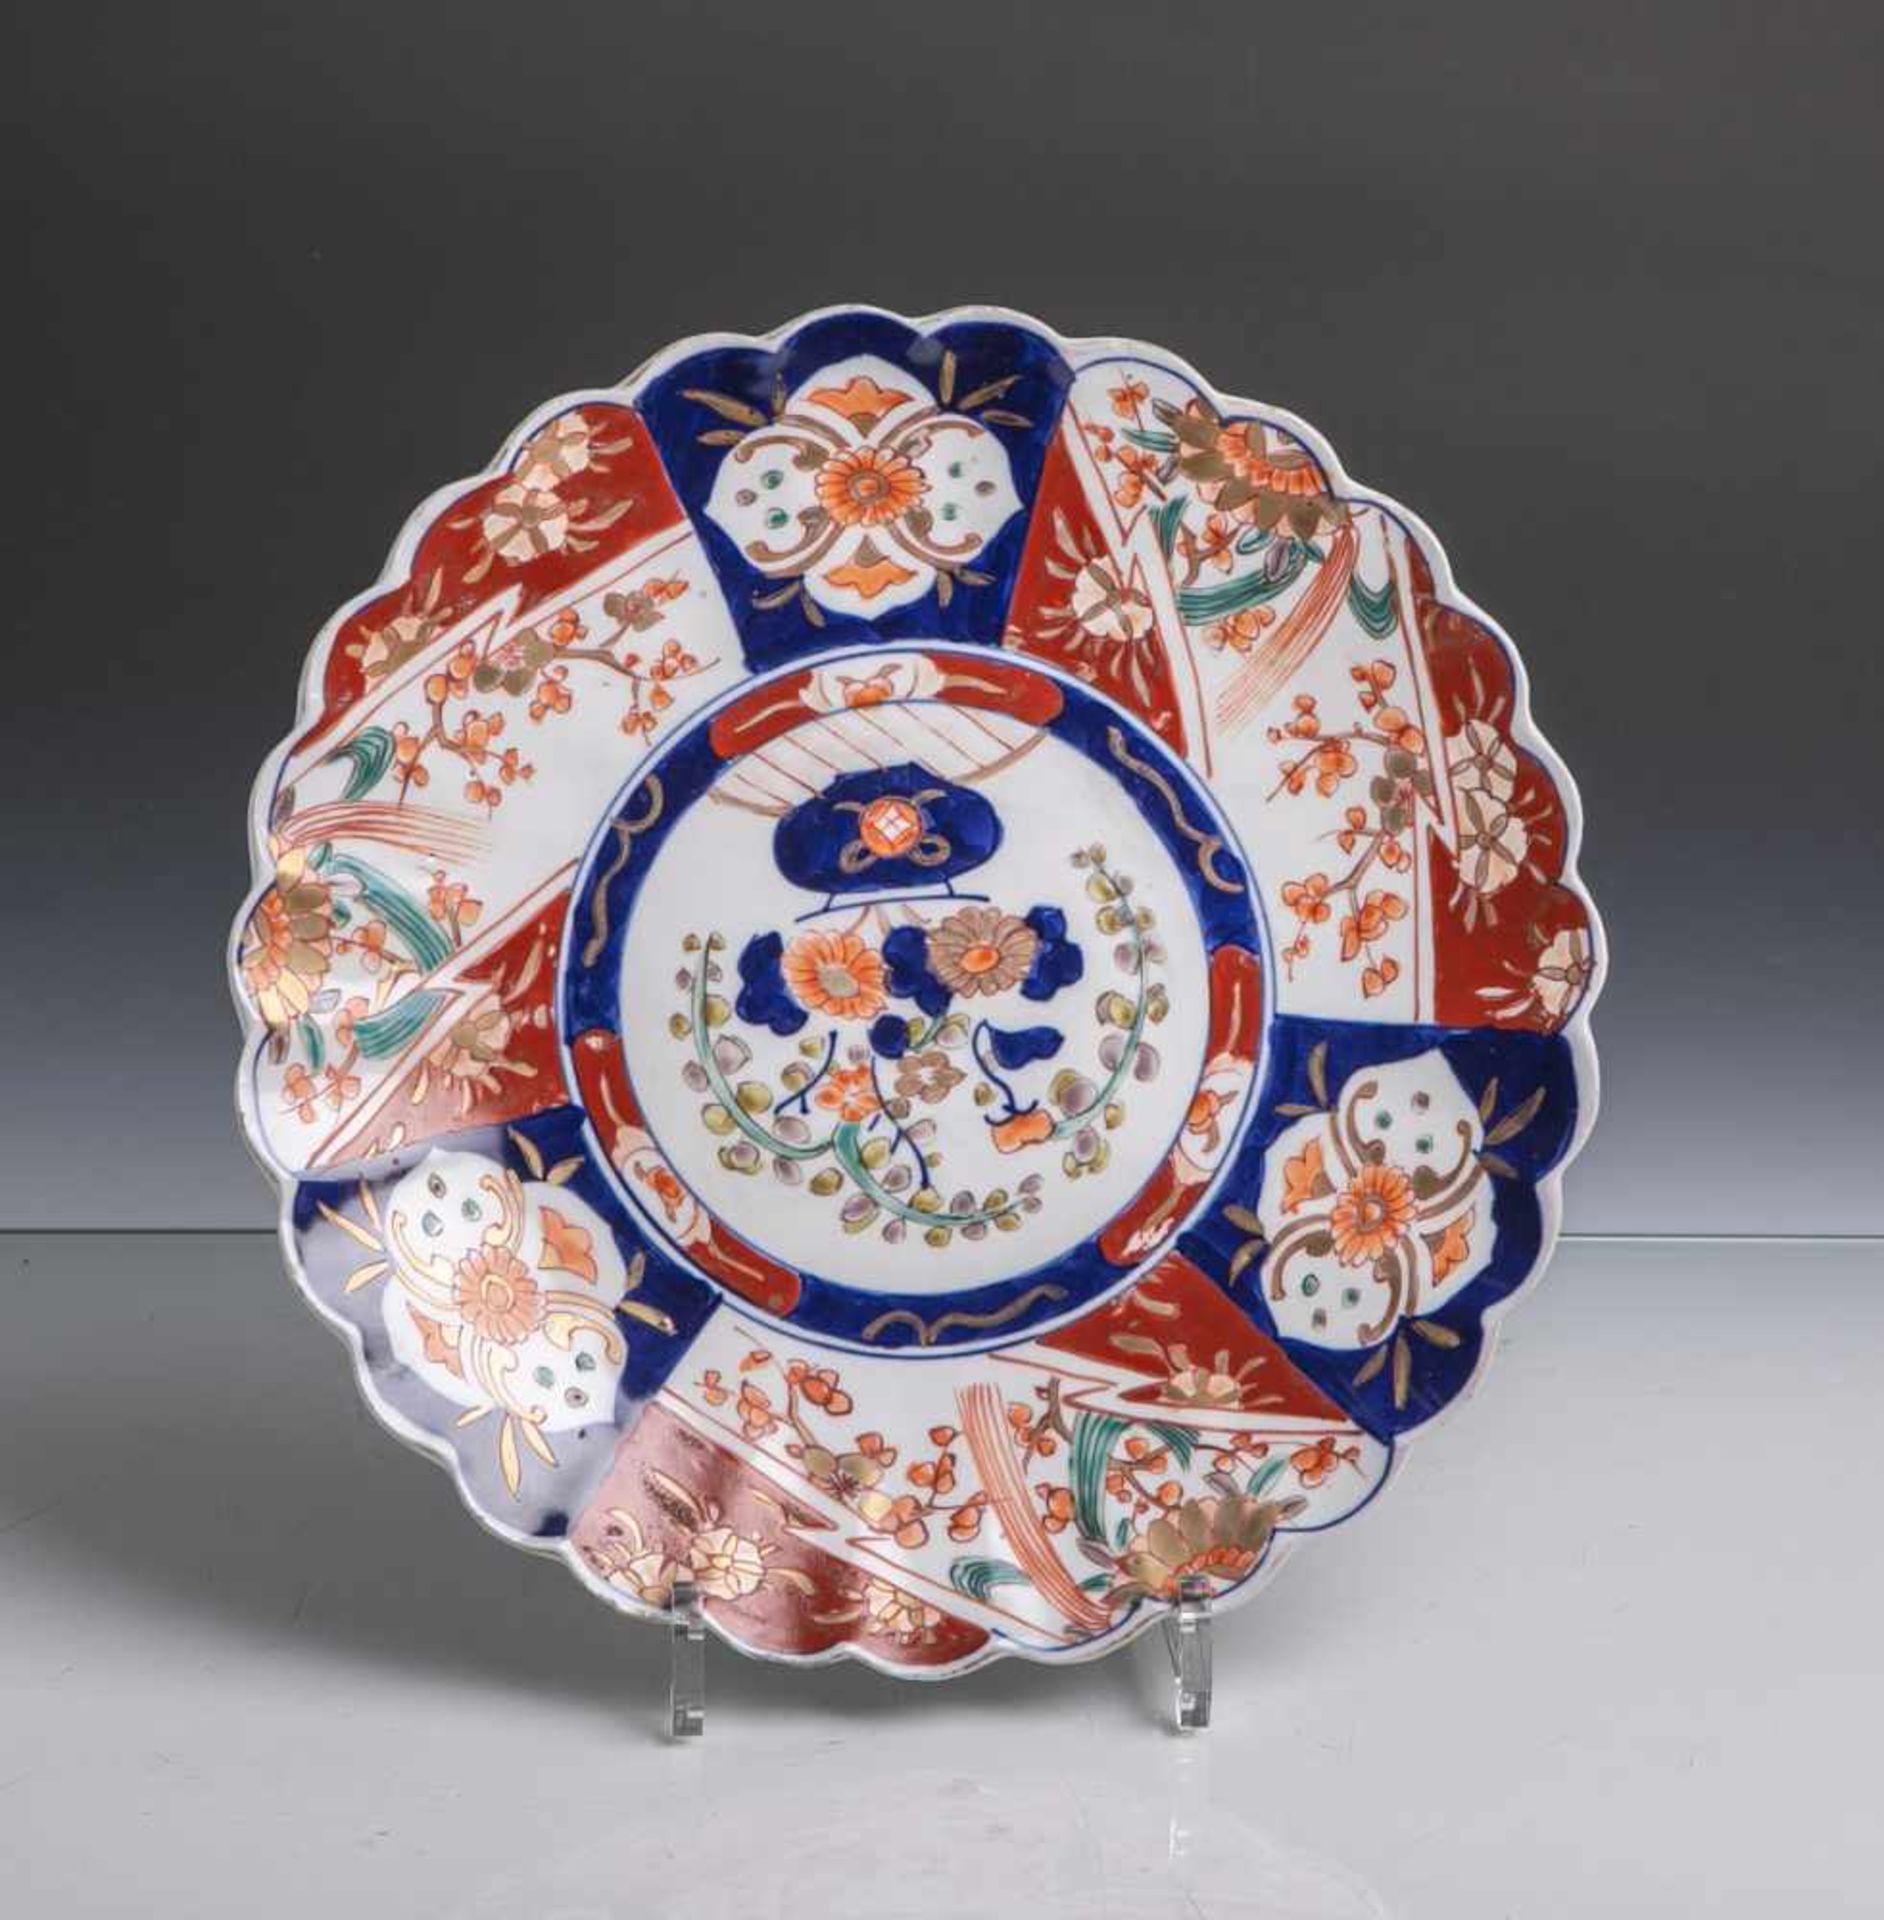 Großer antiker japanischer Porzellanteller (wohl 19./20. Jahrhundert, wohl Meiji),polychrom bemalt